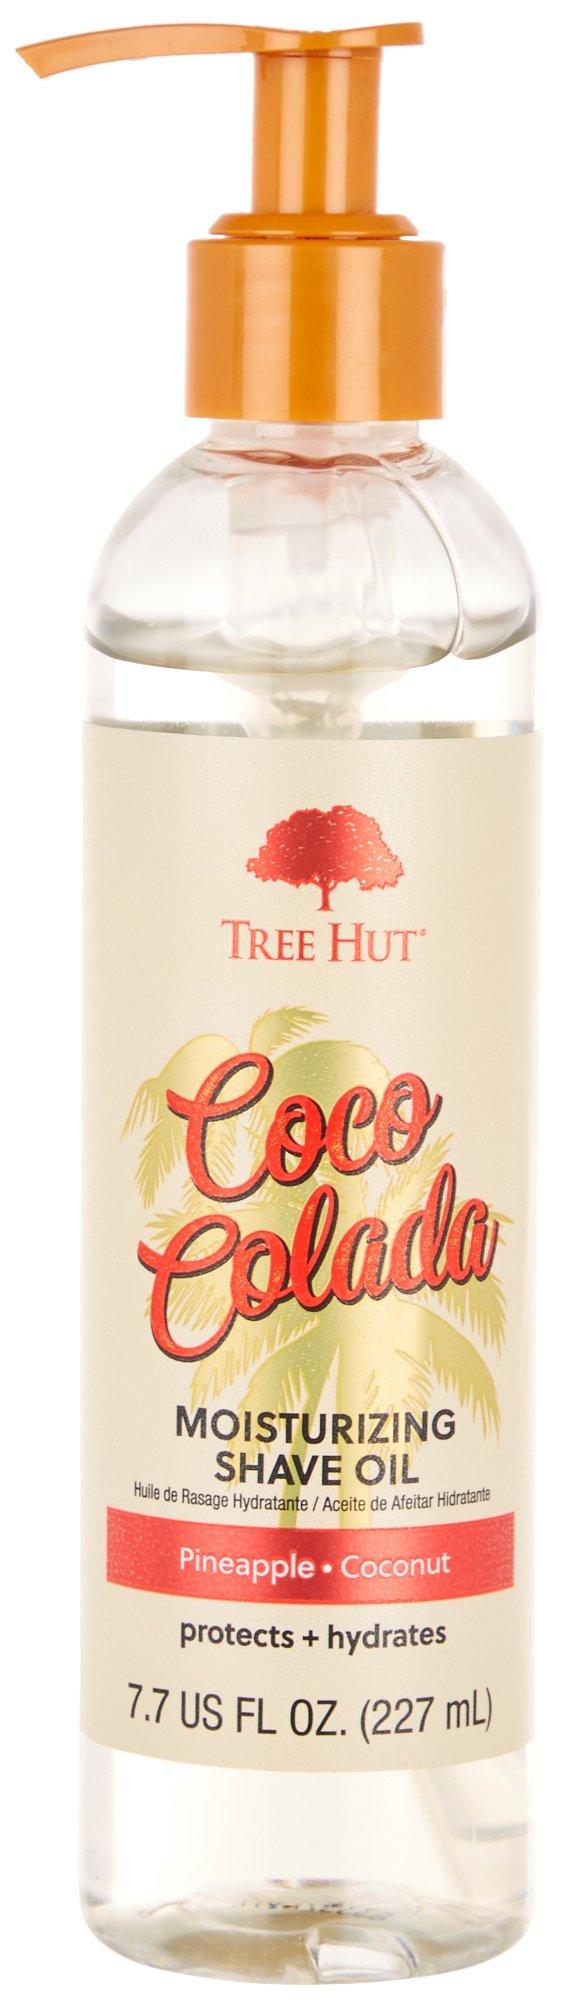 Tree Hut Coco Colada Moisturizing Shave Oil